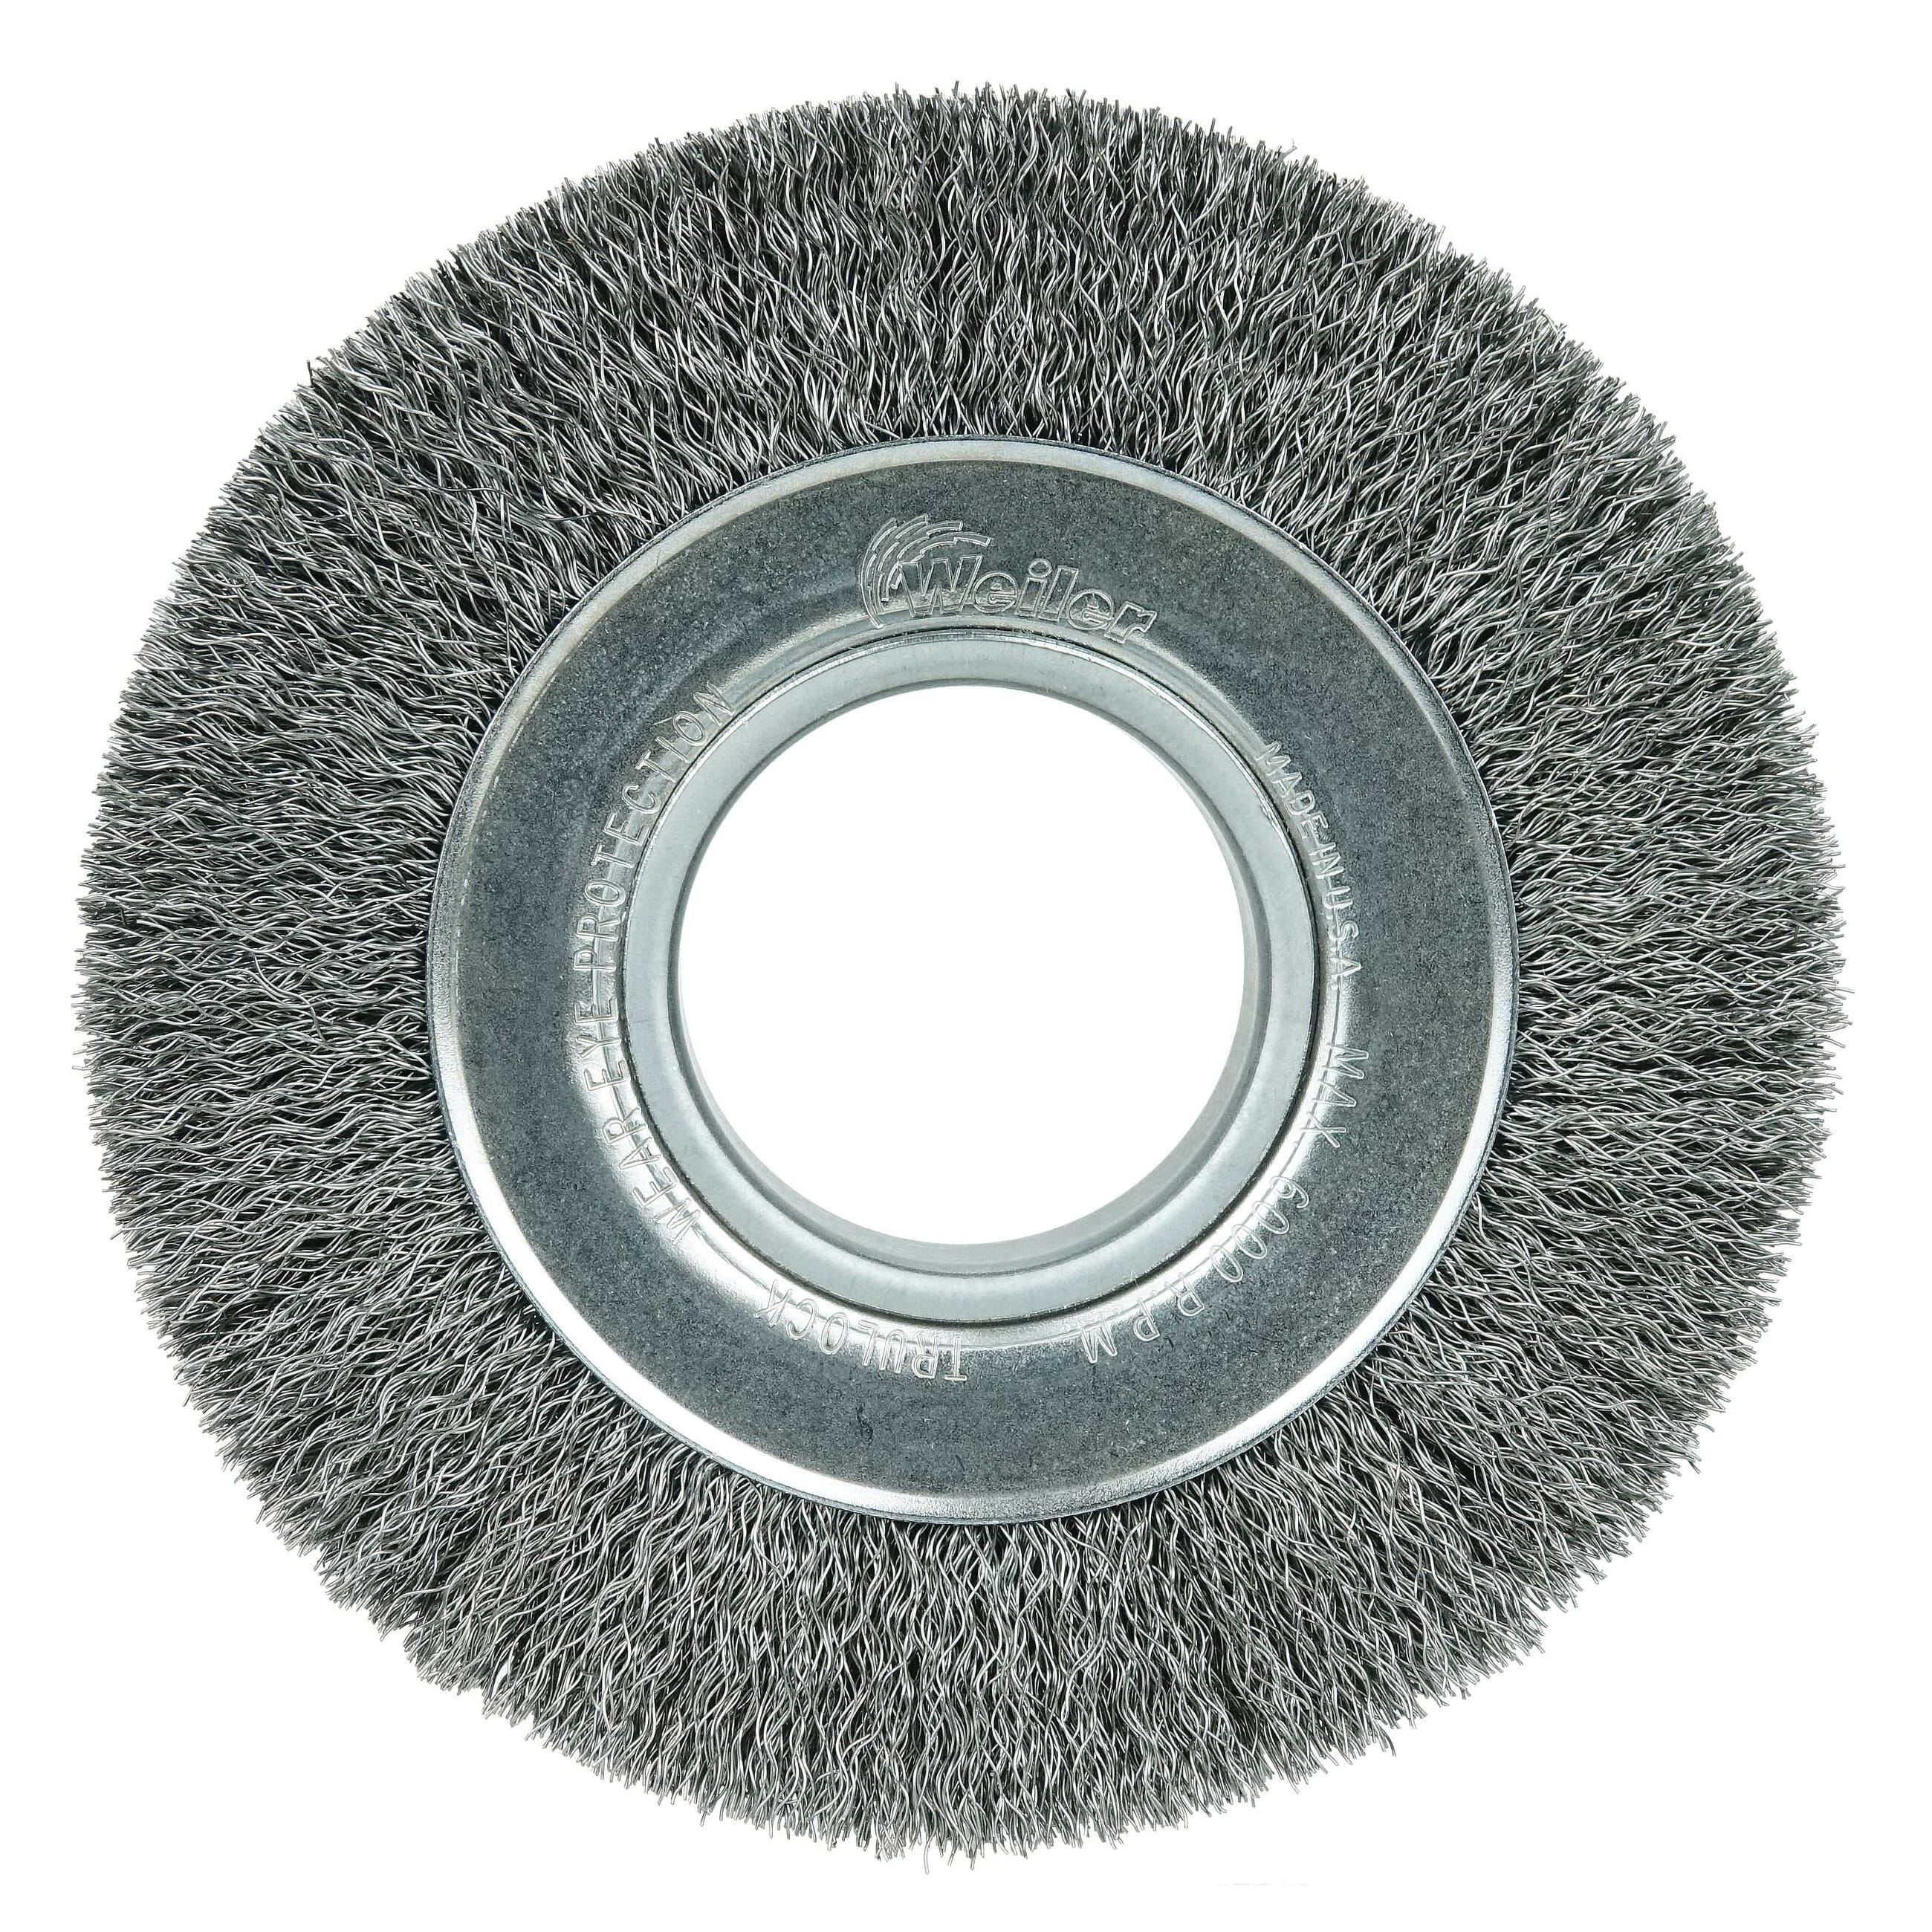 Weiler® 06070 Medium Face Wheel Brush, 6 in Dia Brush, 1 in W Face, 0.0118 in Dia Crimped Filament/Wire, 2 in Arbor Hole